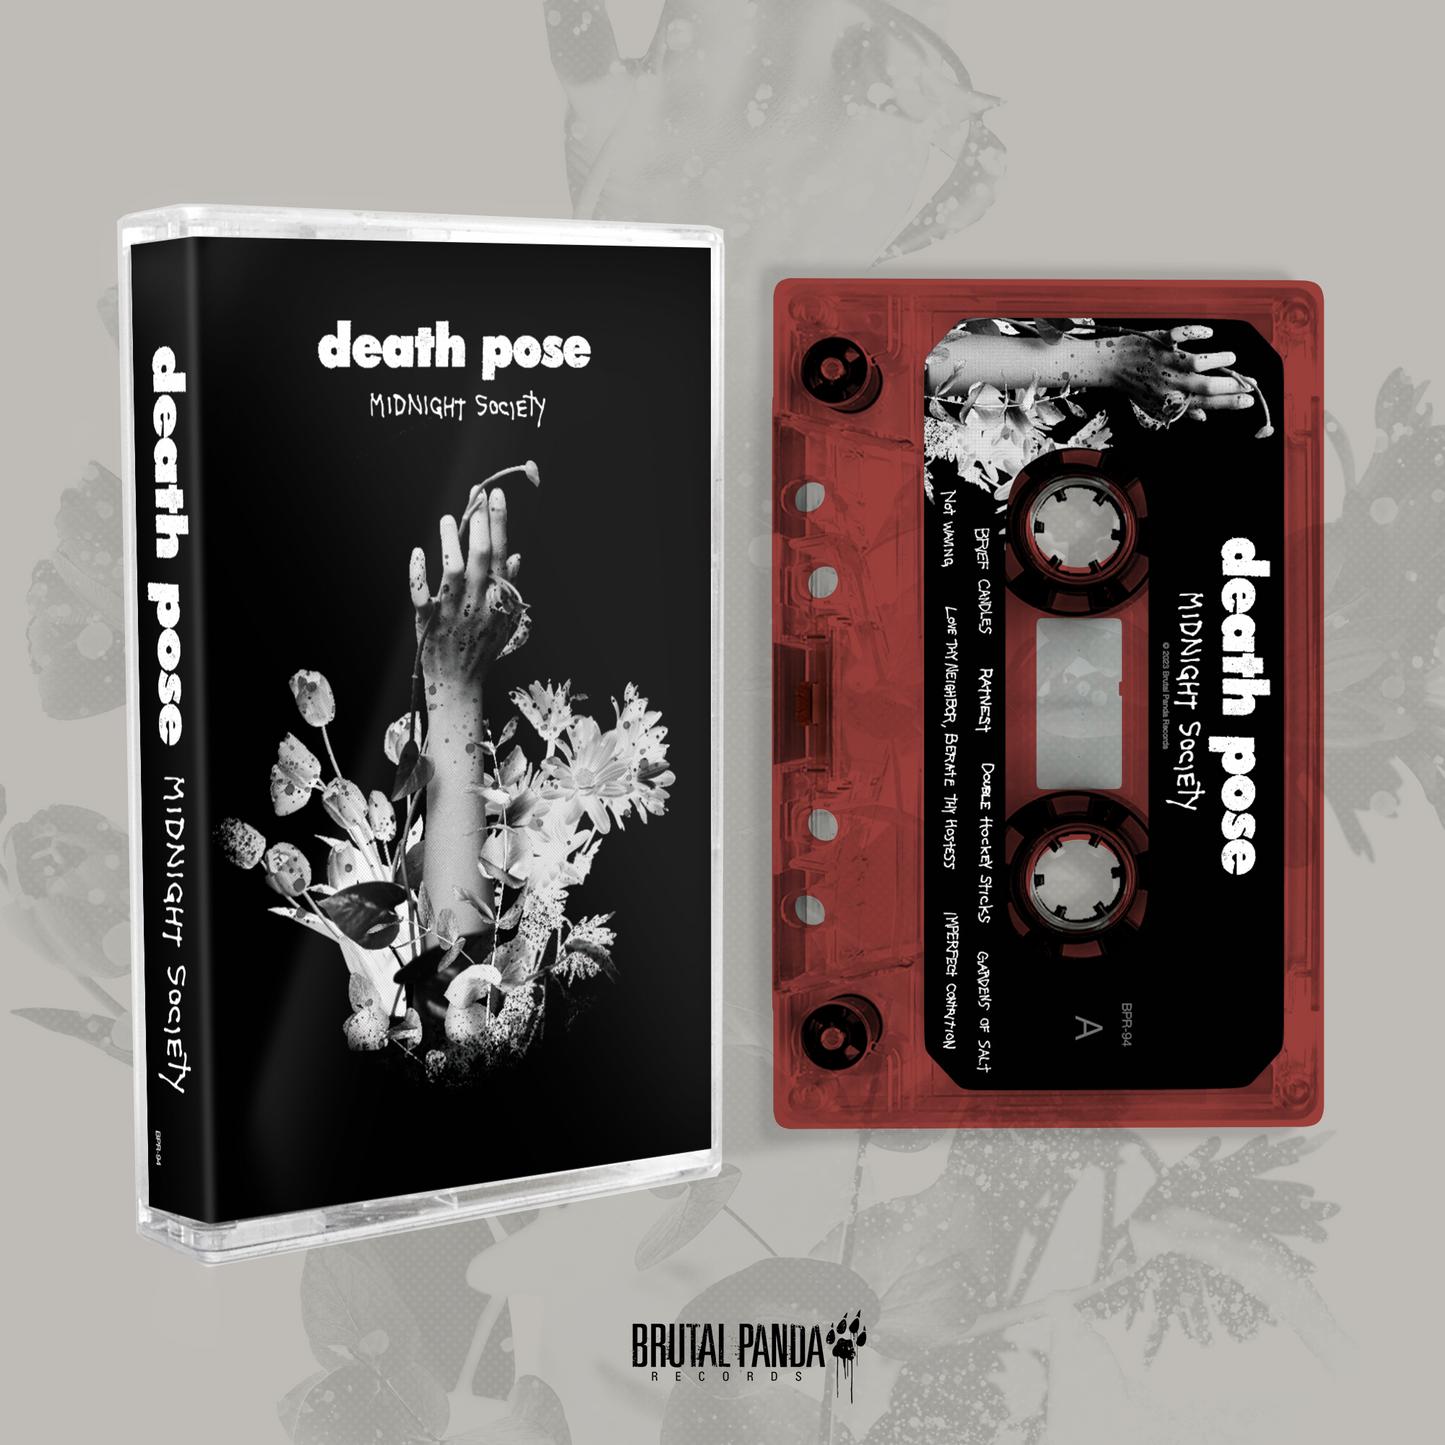 death pose - Midnight Society - Cassette Tape (Pre-Order)